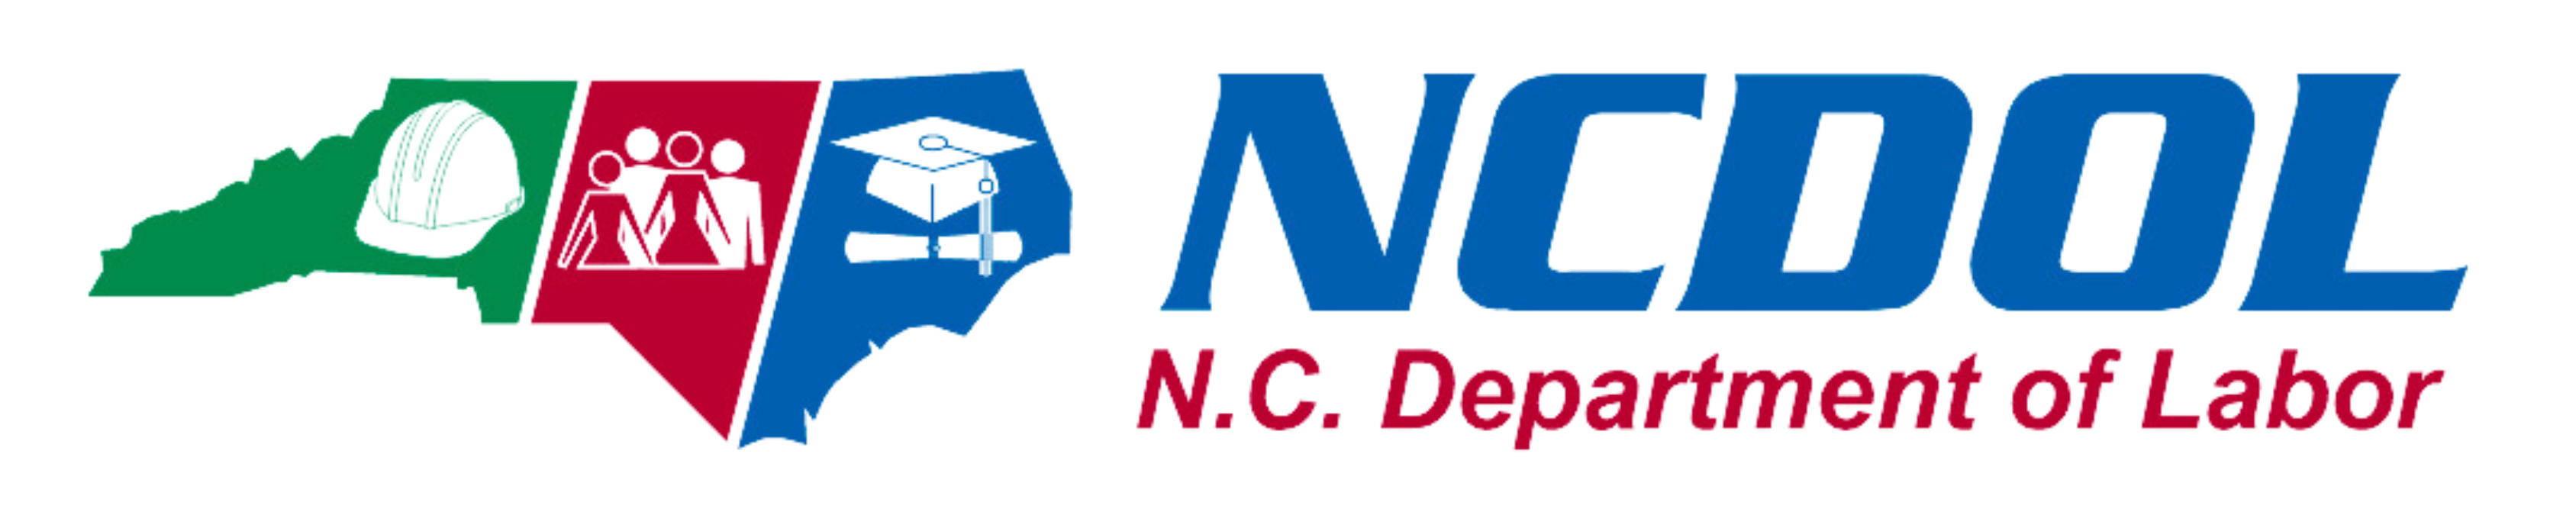 NC Department of Labor Logo